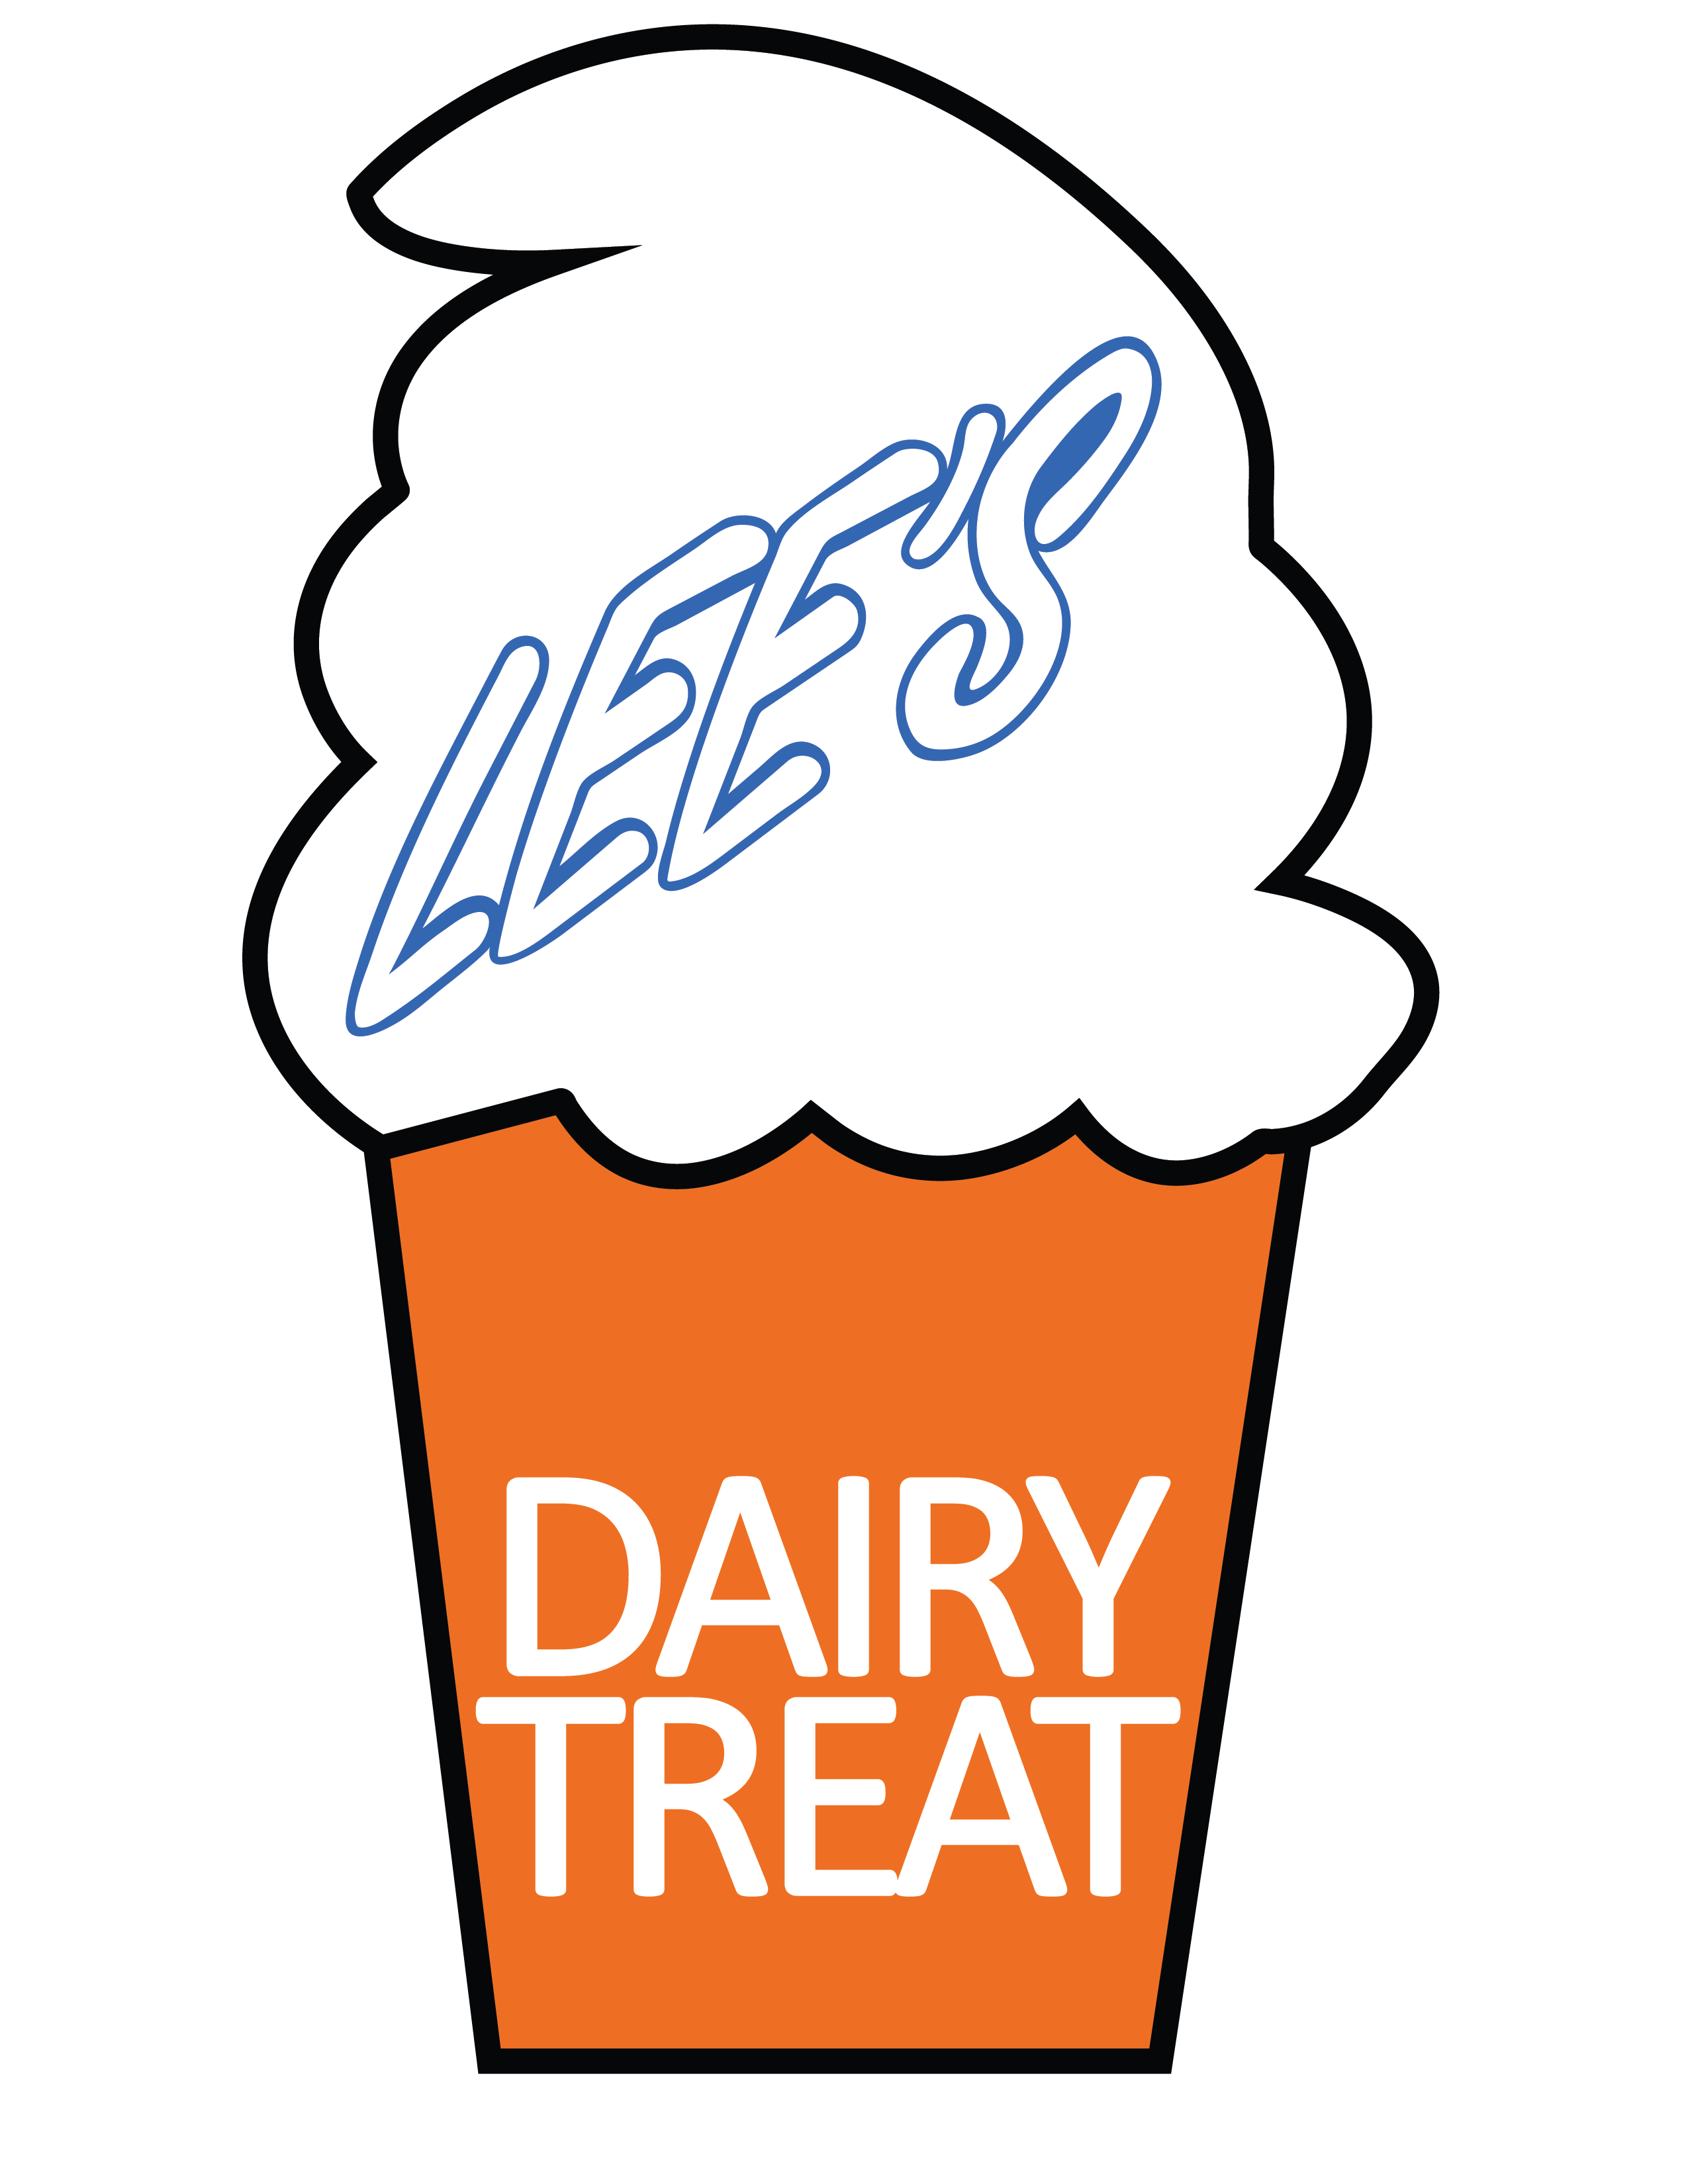 Lee's Dairy Treat